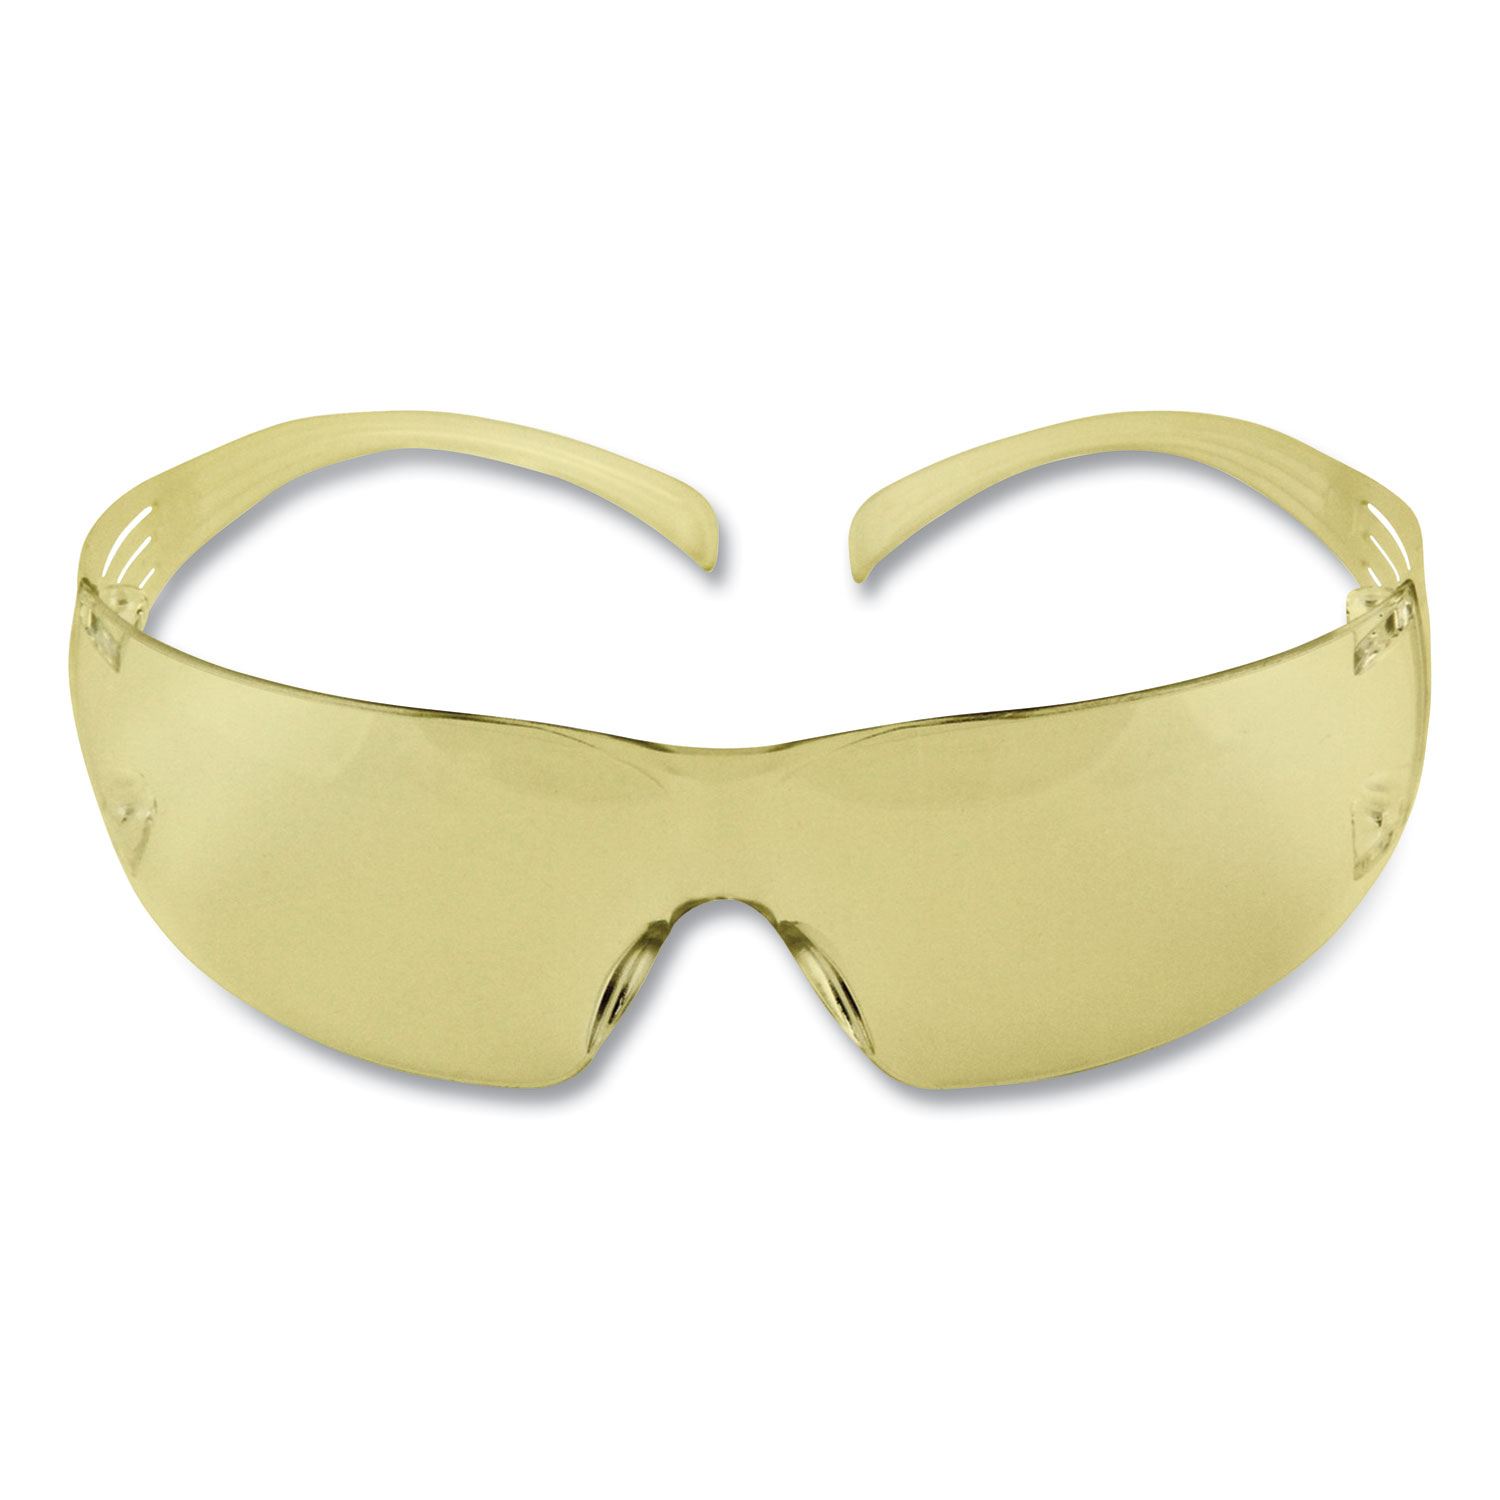 3M™ SecureFit Protective Eyewear, Anti-Fog/Anti-Scratch, Amber Lens